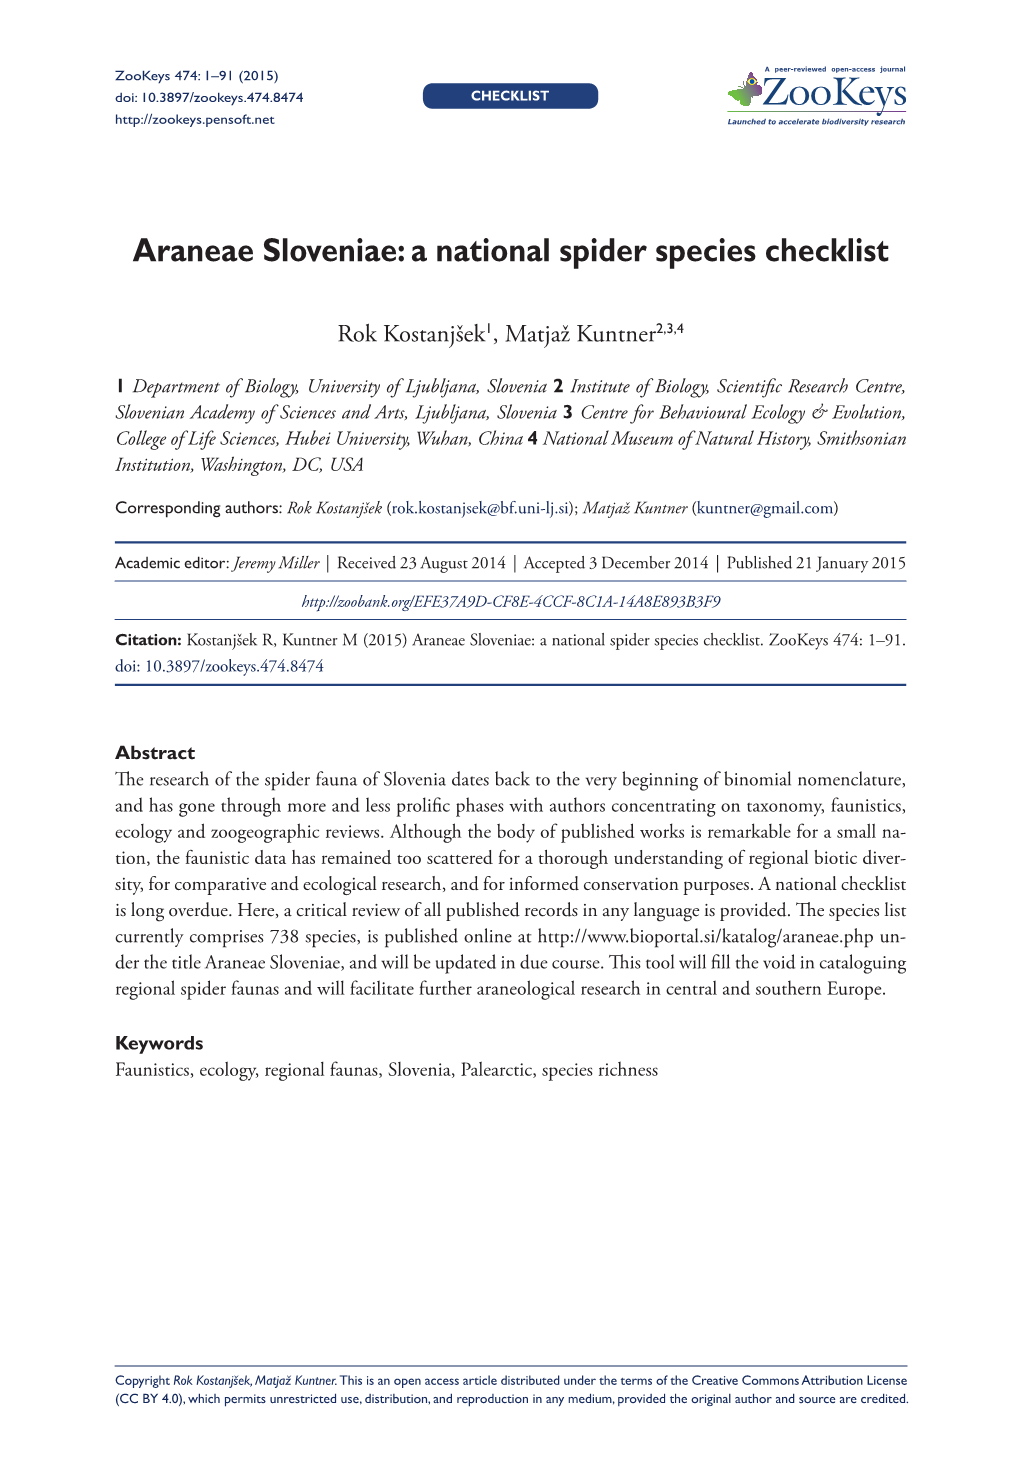 ﻿Araneae Sloveniae: a National Spider Species Checklist